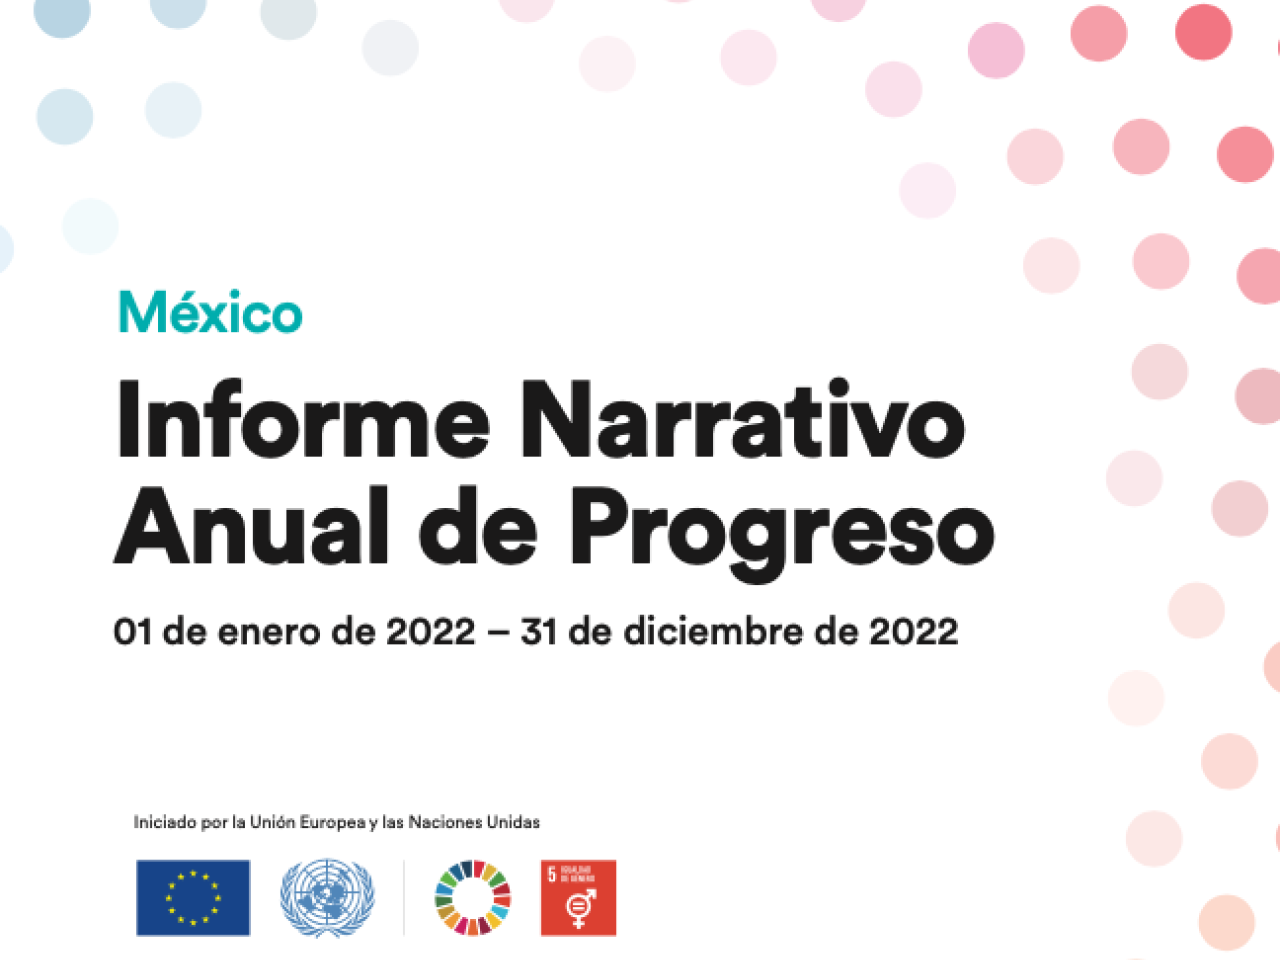 Iniciativa Spotlight Mexico Informe 2022